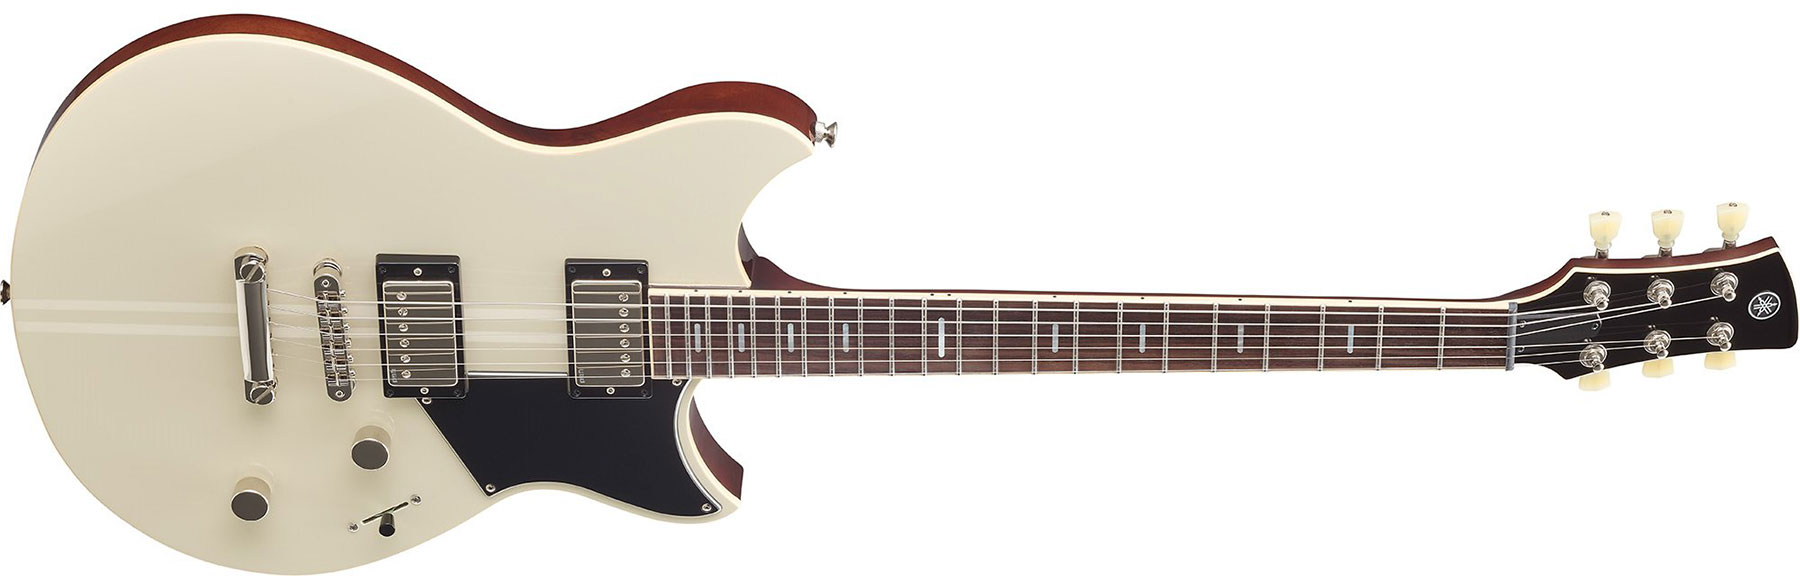 Yamaha Rss20 Revstar Standard Hh Ht Rw - Vintage White - Double Cut E-Gitarre - Variation 1